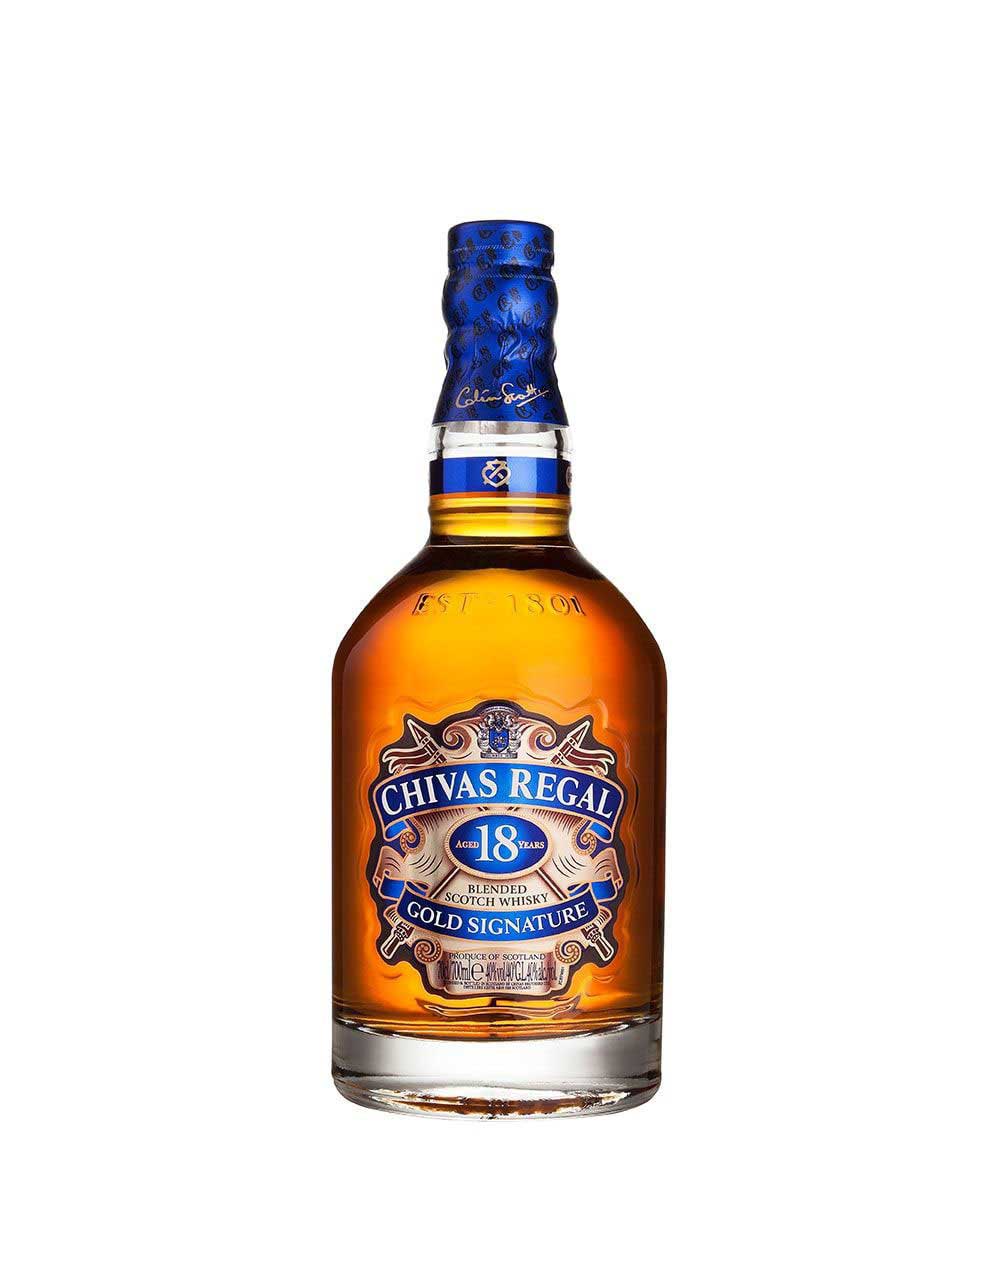 Tullamore Dew Caribbean Rum Cask Irish Whiskey